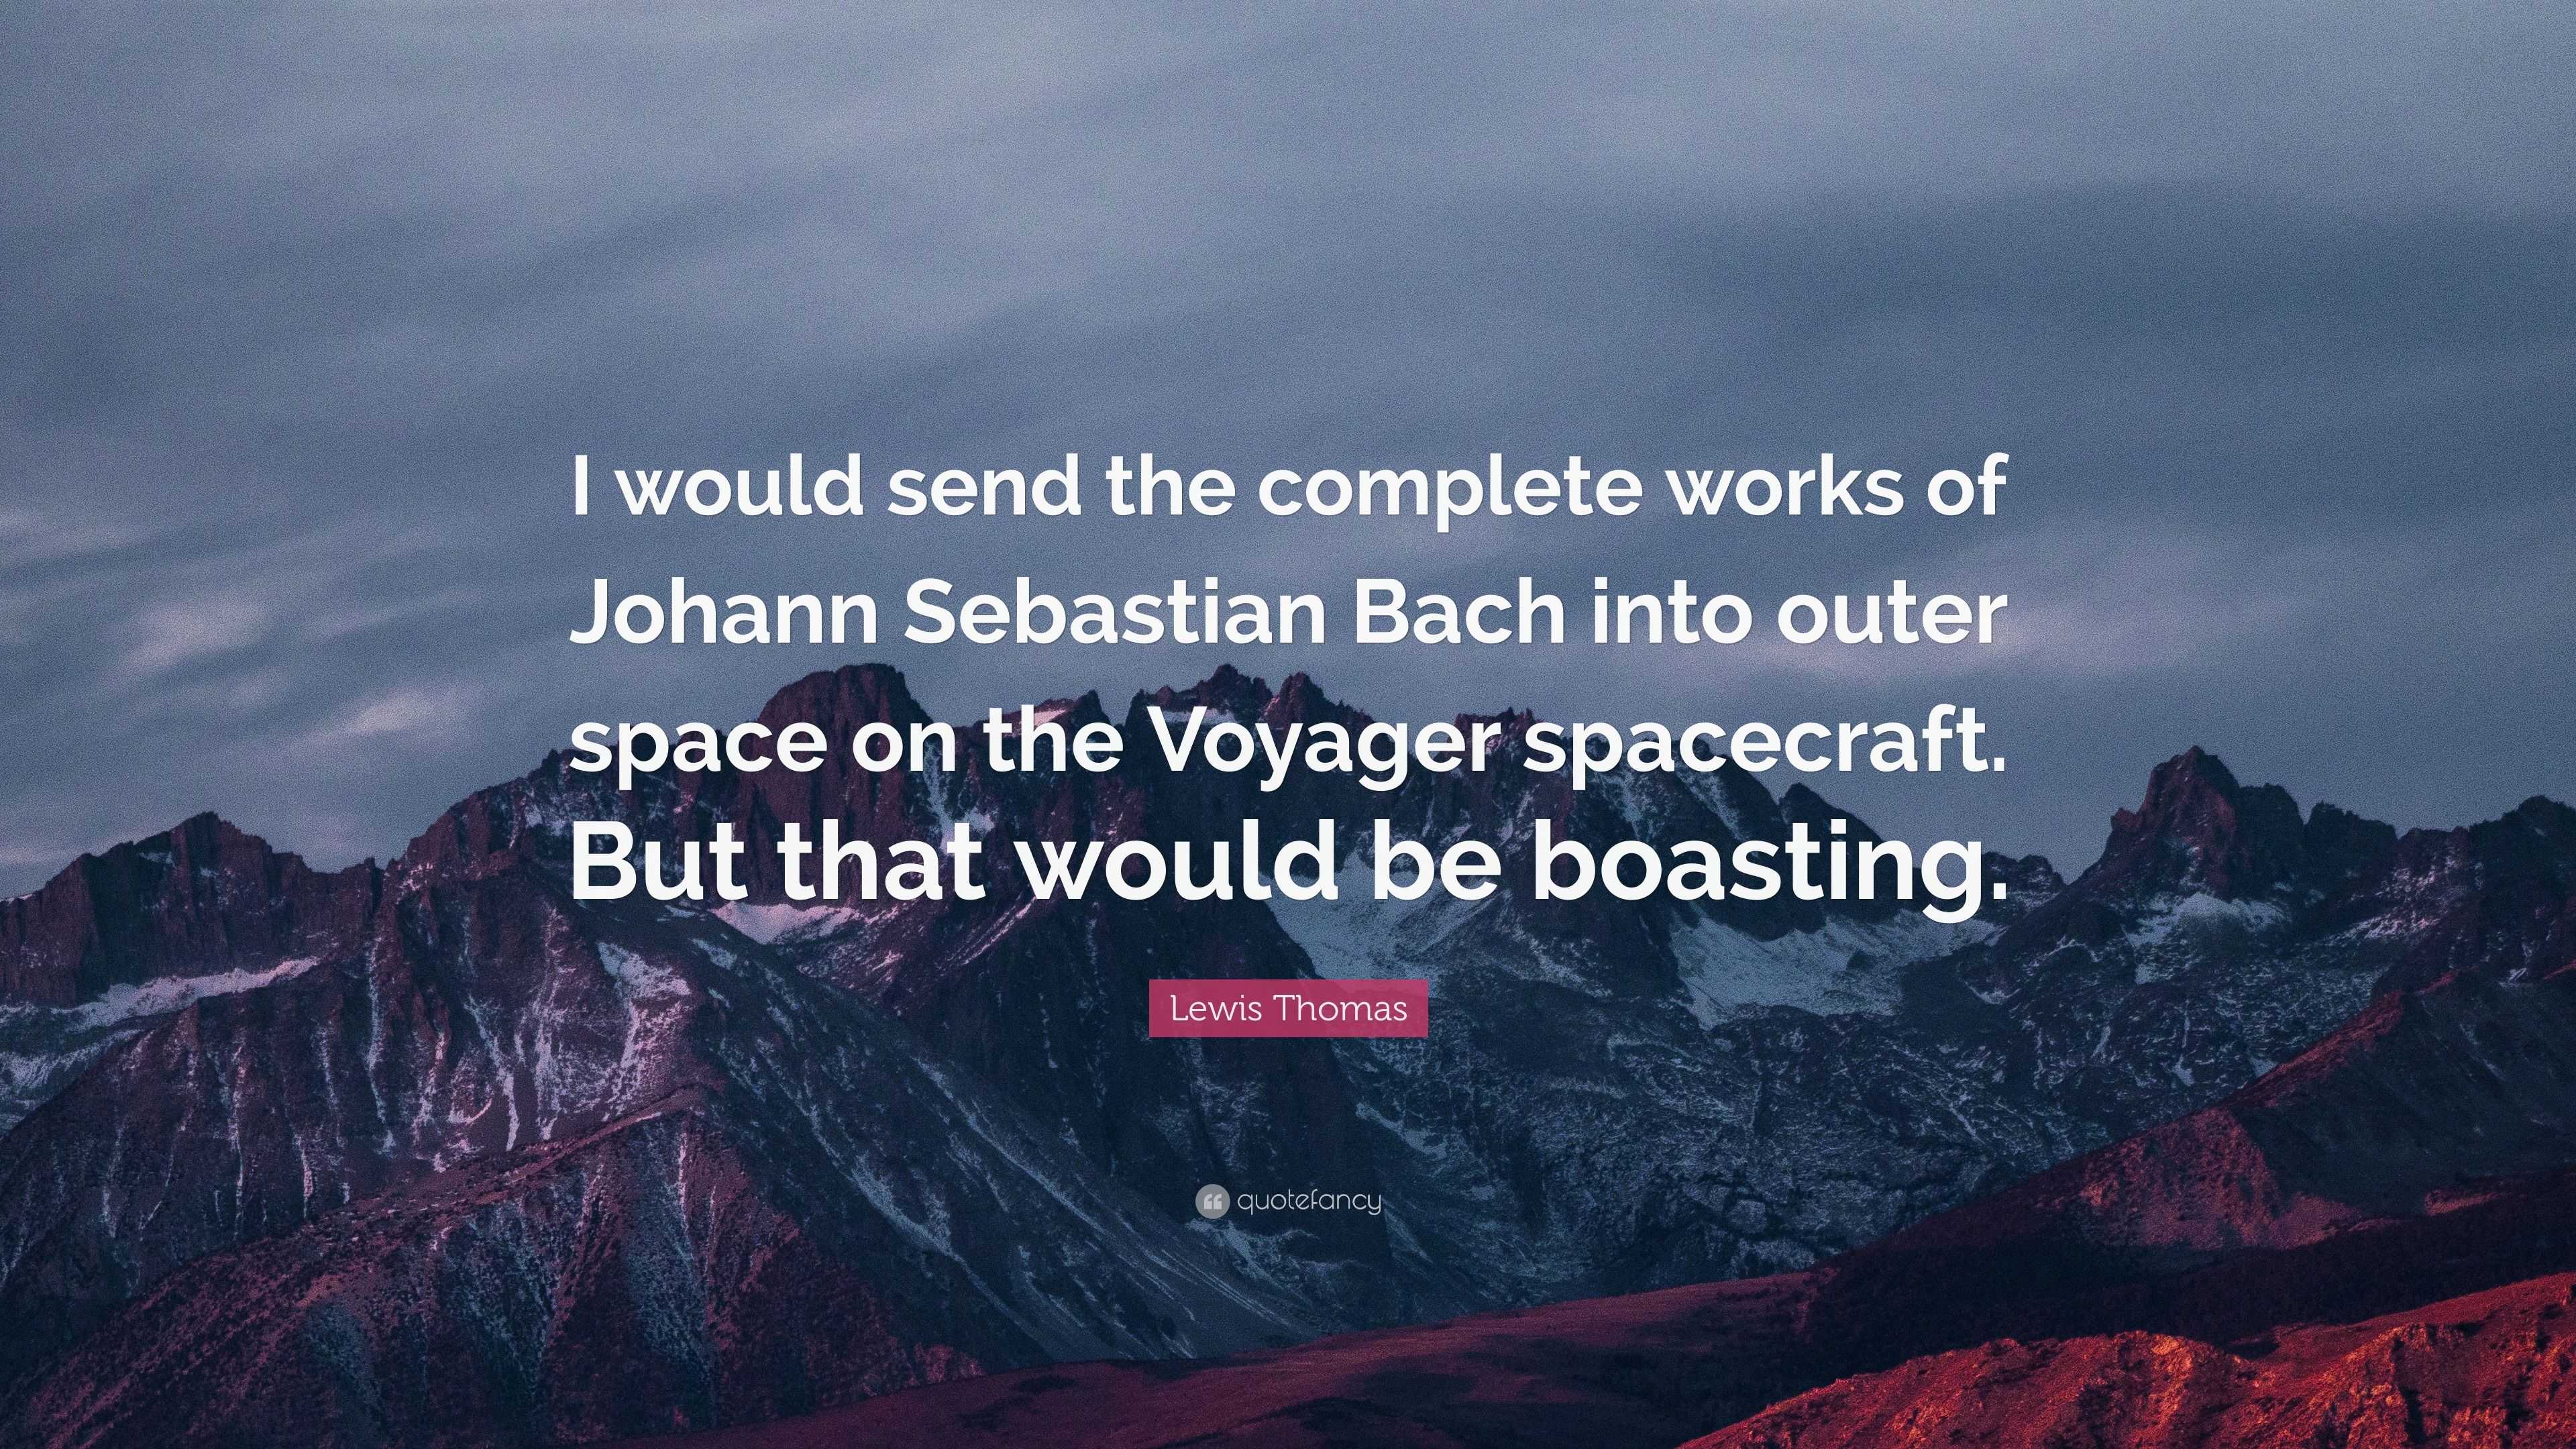 voyager spacecraft quotes